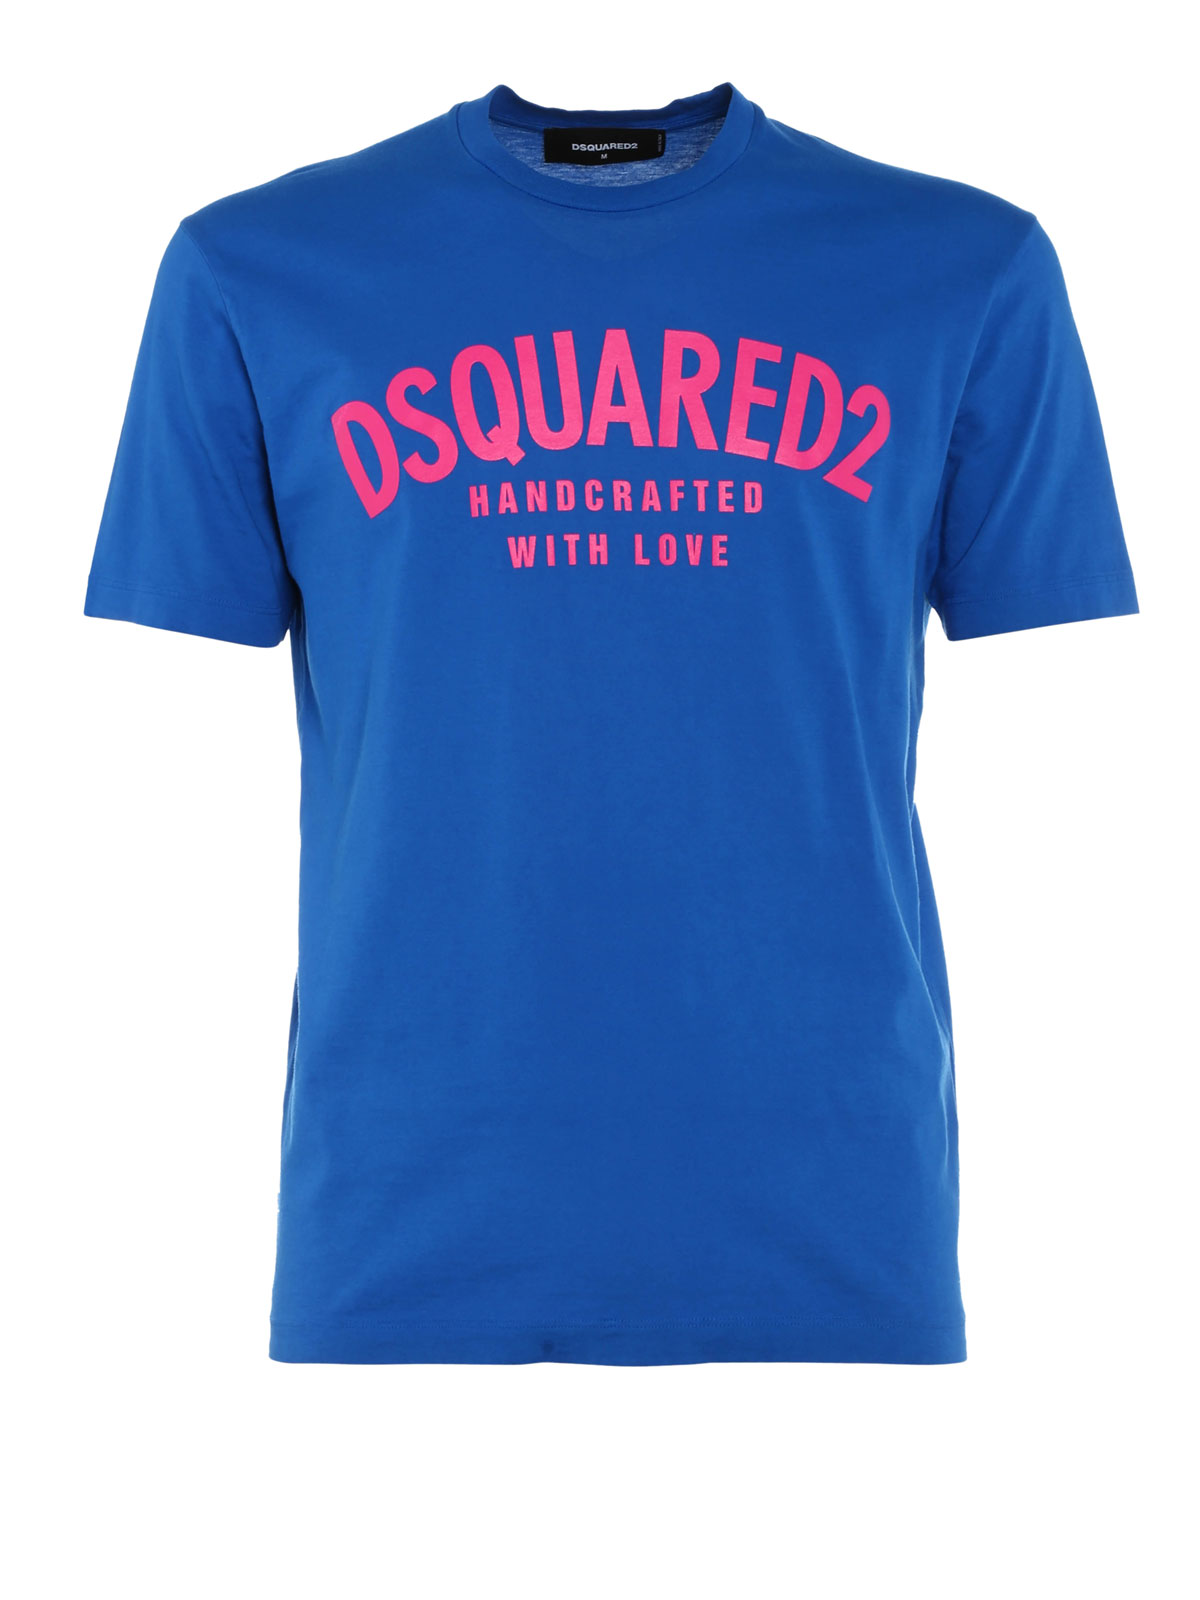 dsquared2 t shirt blue